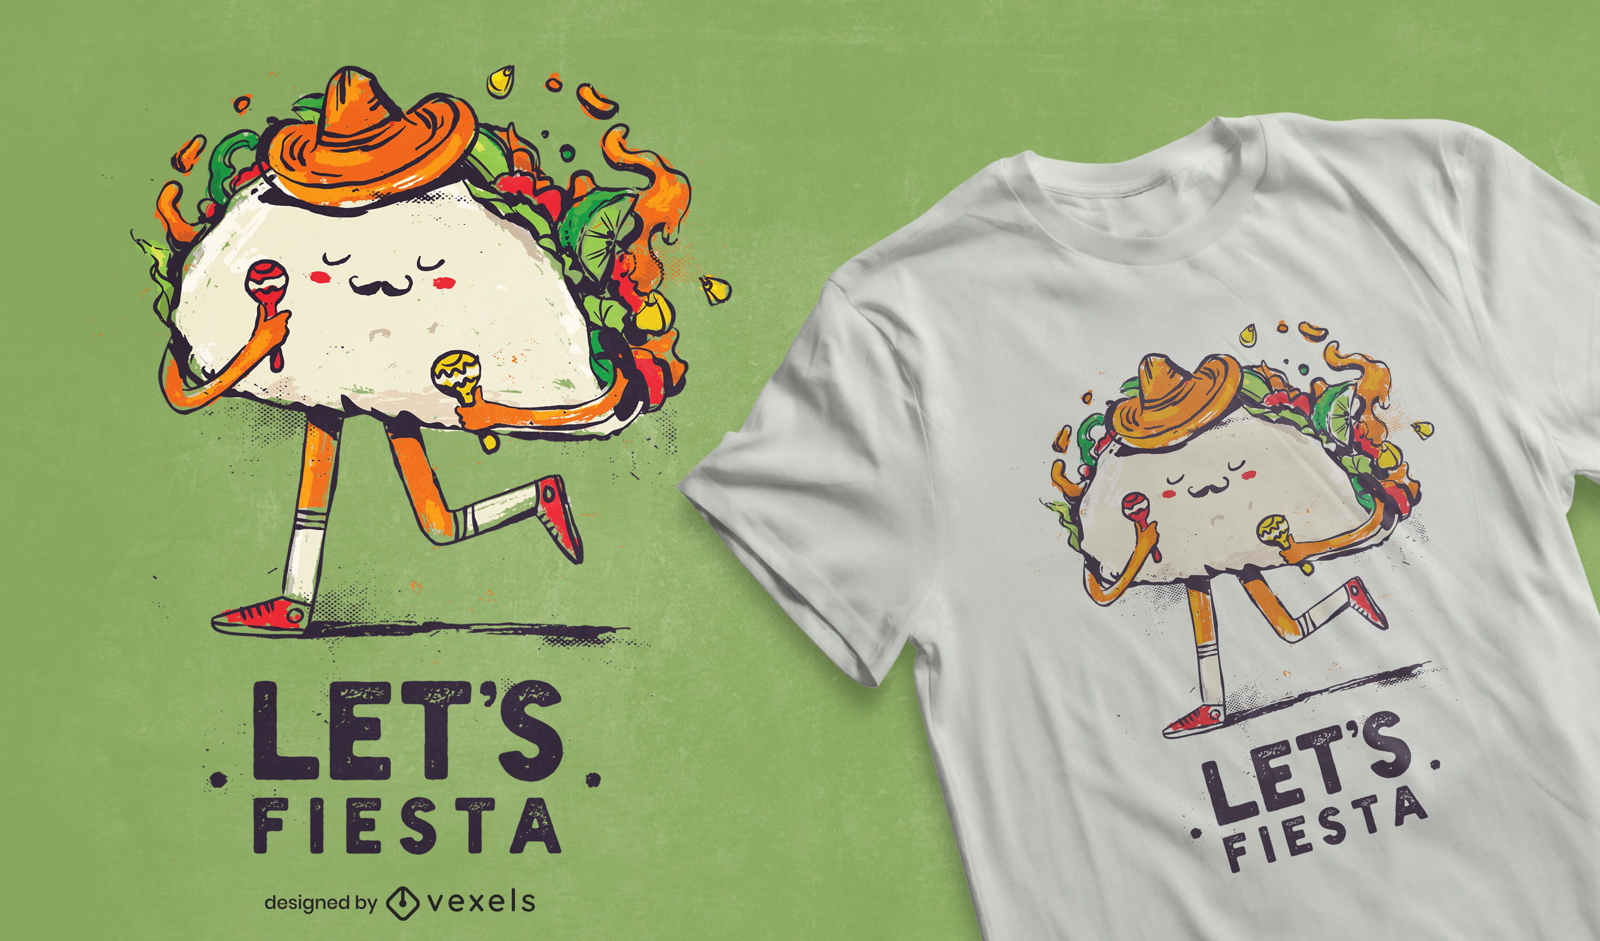 Let's fiesta t-shirt design